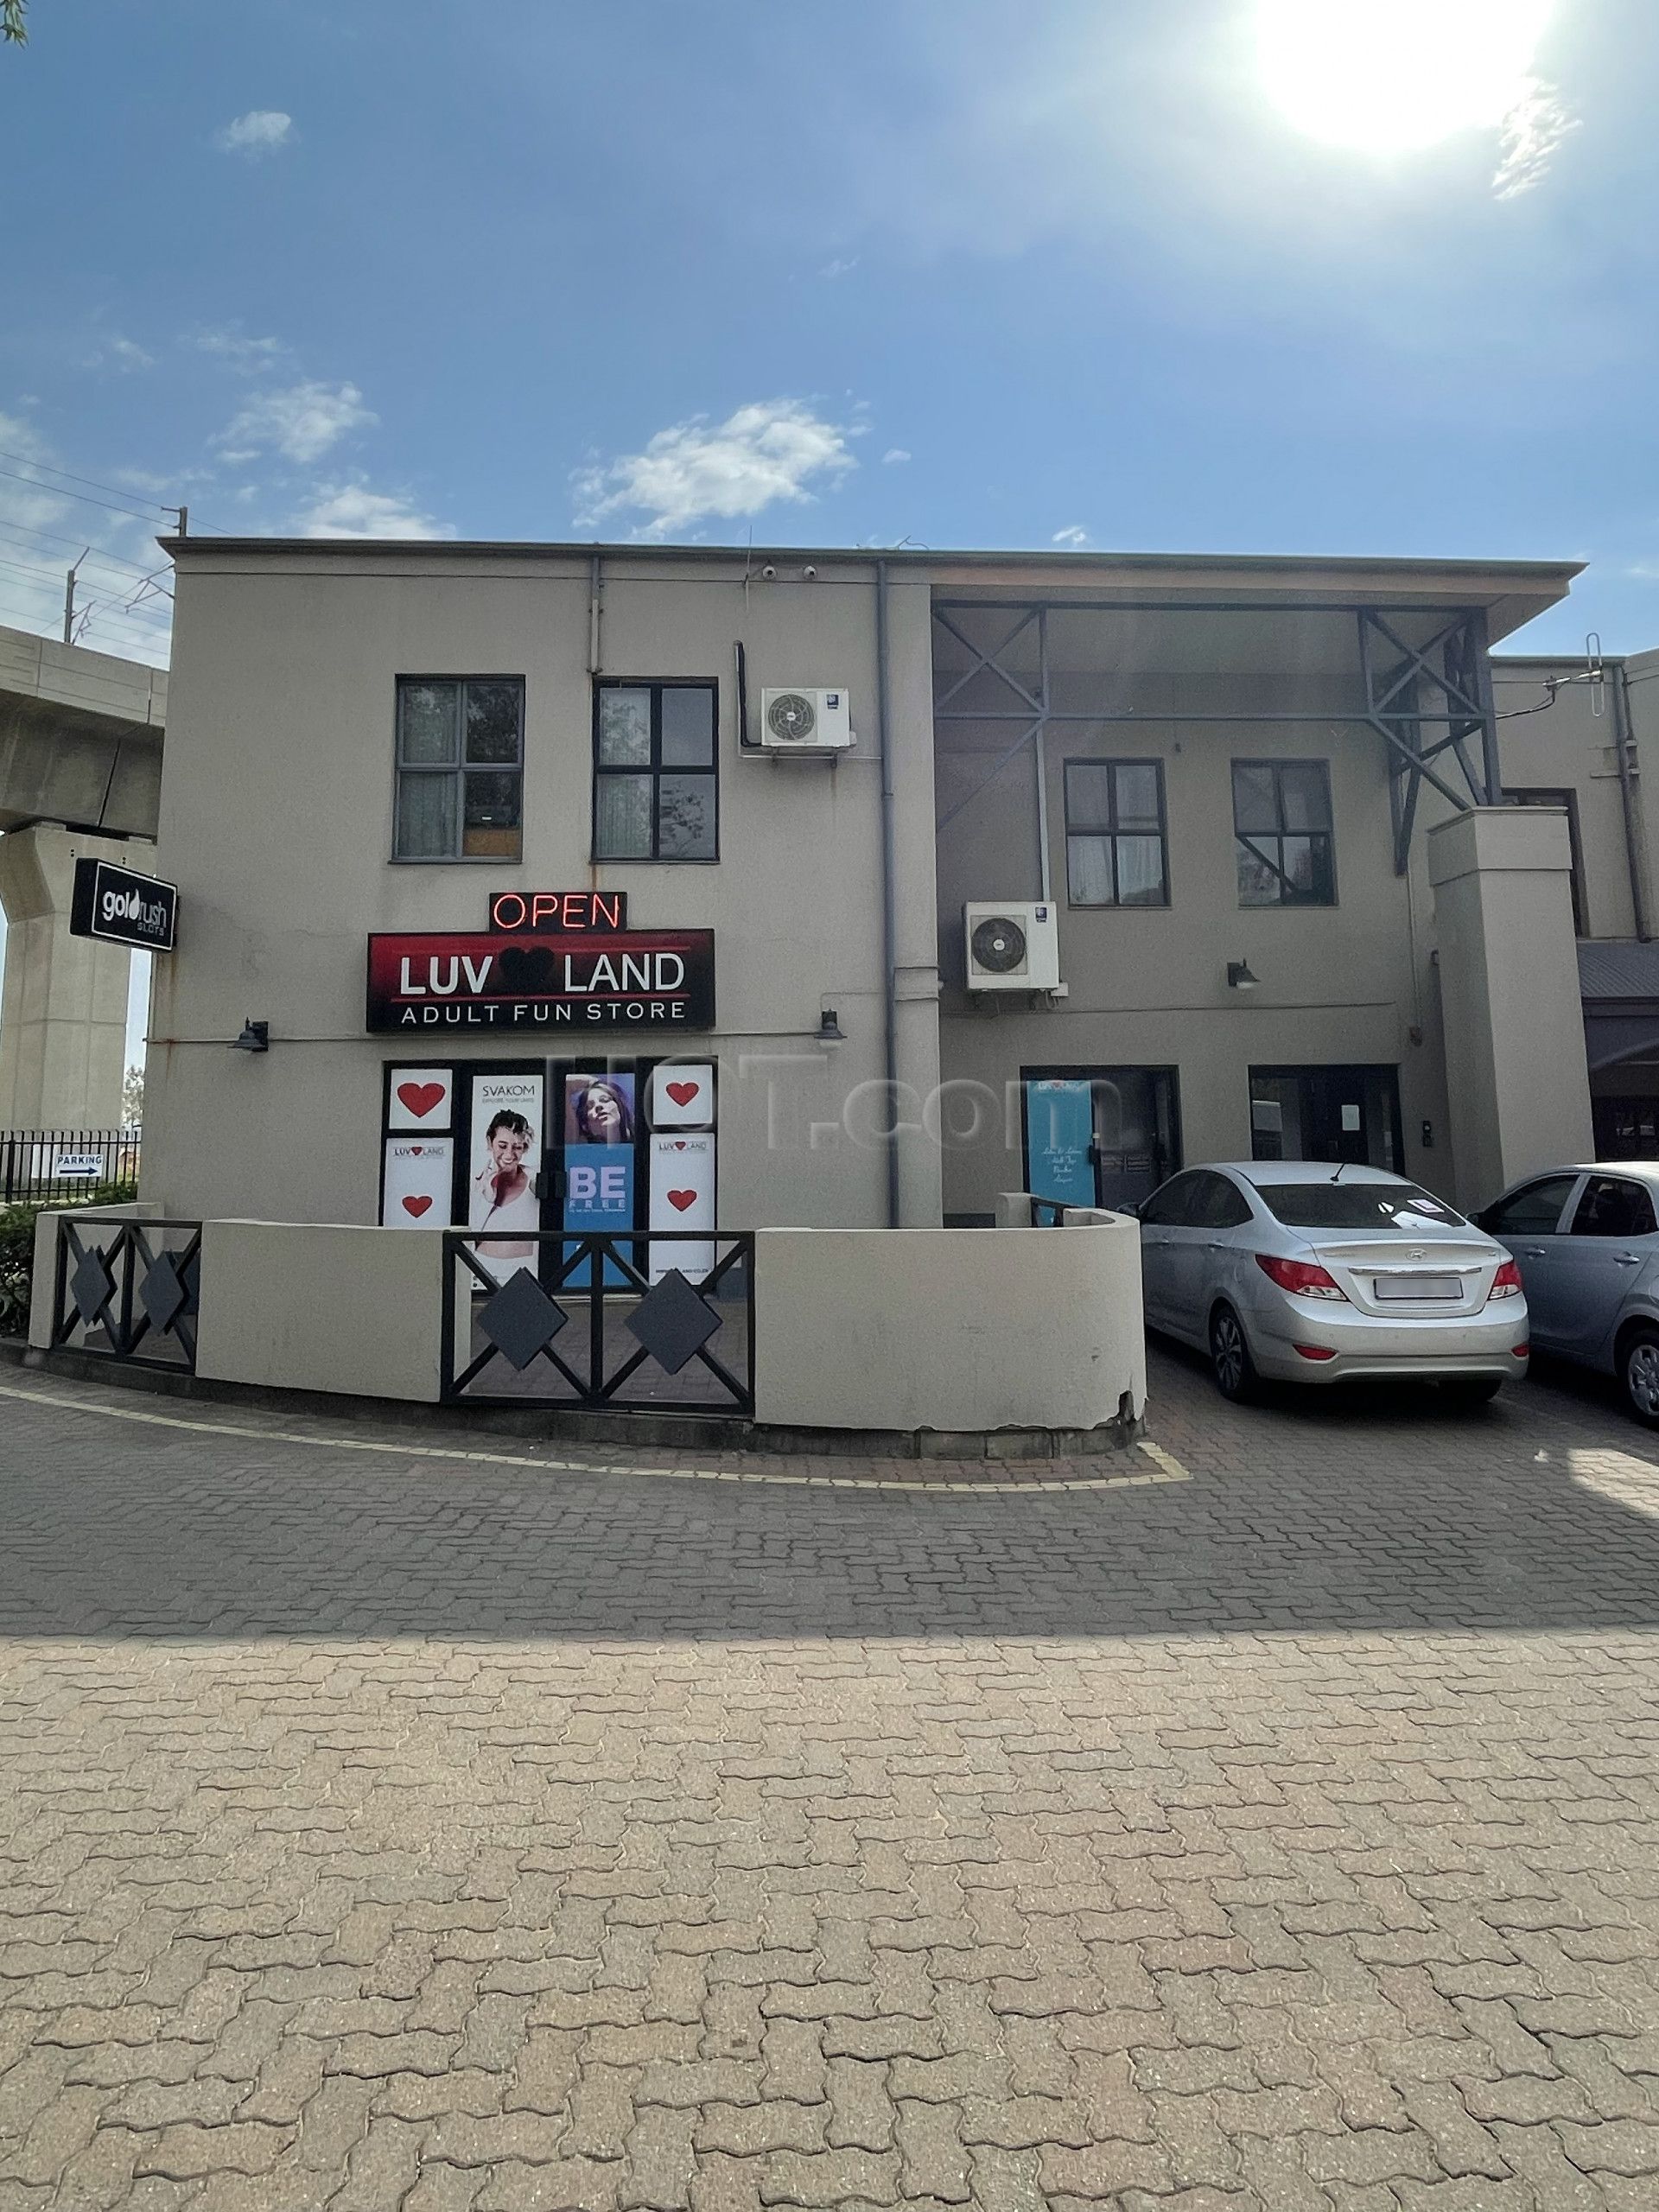 Johannesburg, South Africa Luvland Adult Fun Store